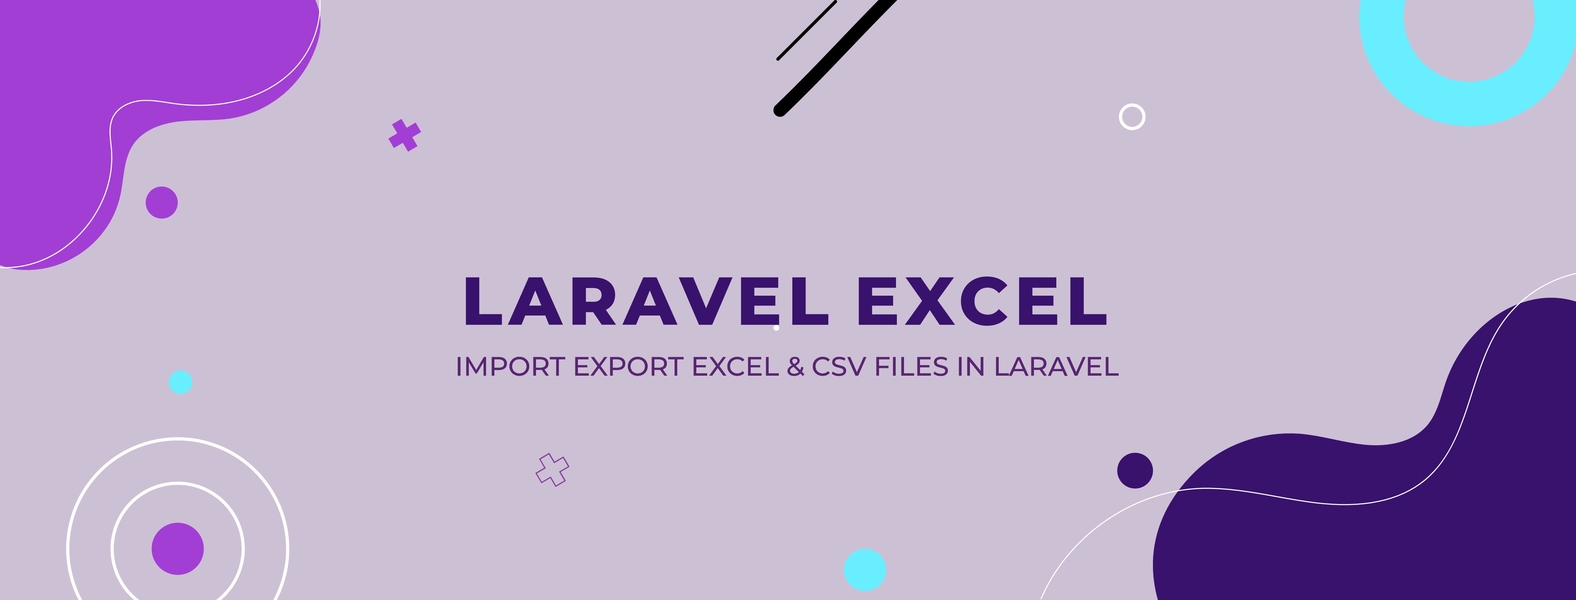 Laravel Excel - Import Export Excel & CSV files in Laravel cover image